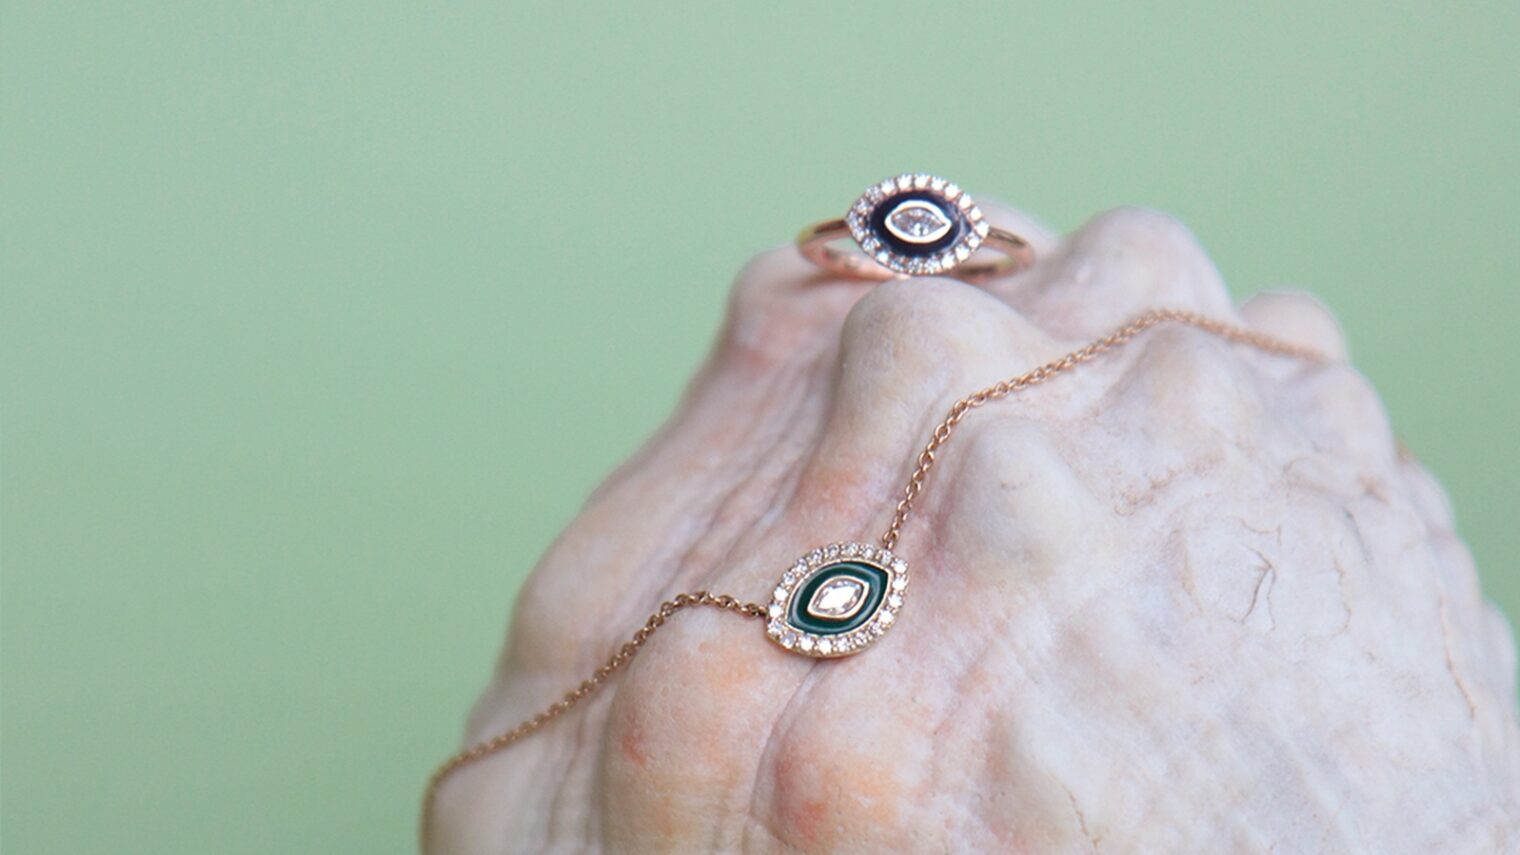 Jewelry by Leehe Segal, Bleecker & Prince. Photo by Saar Goren